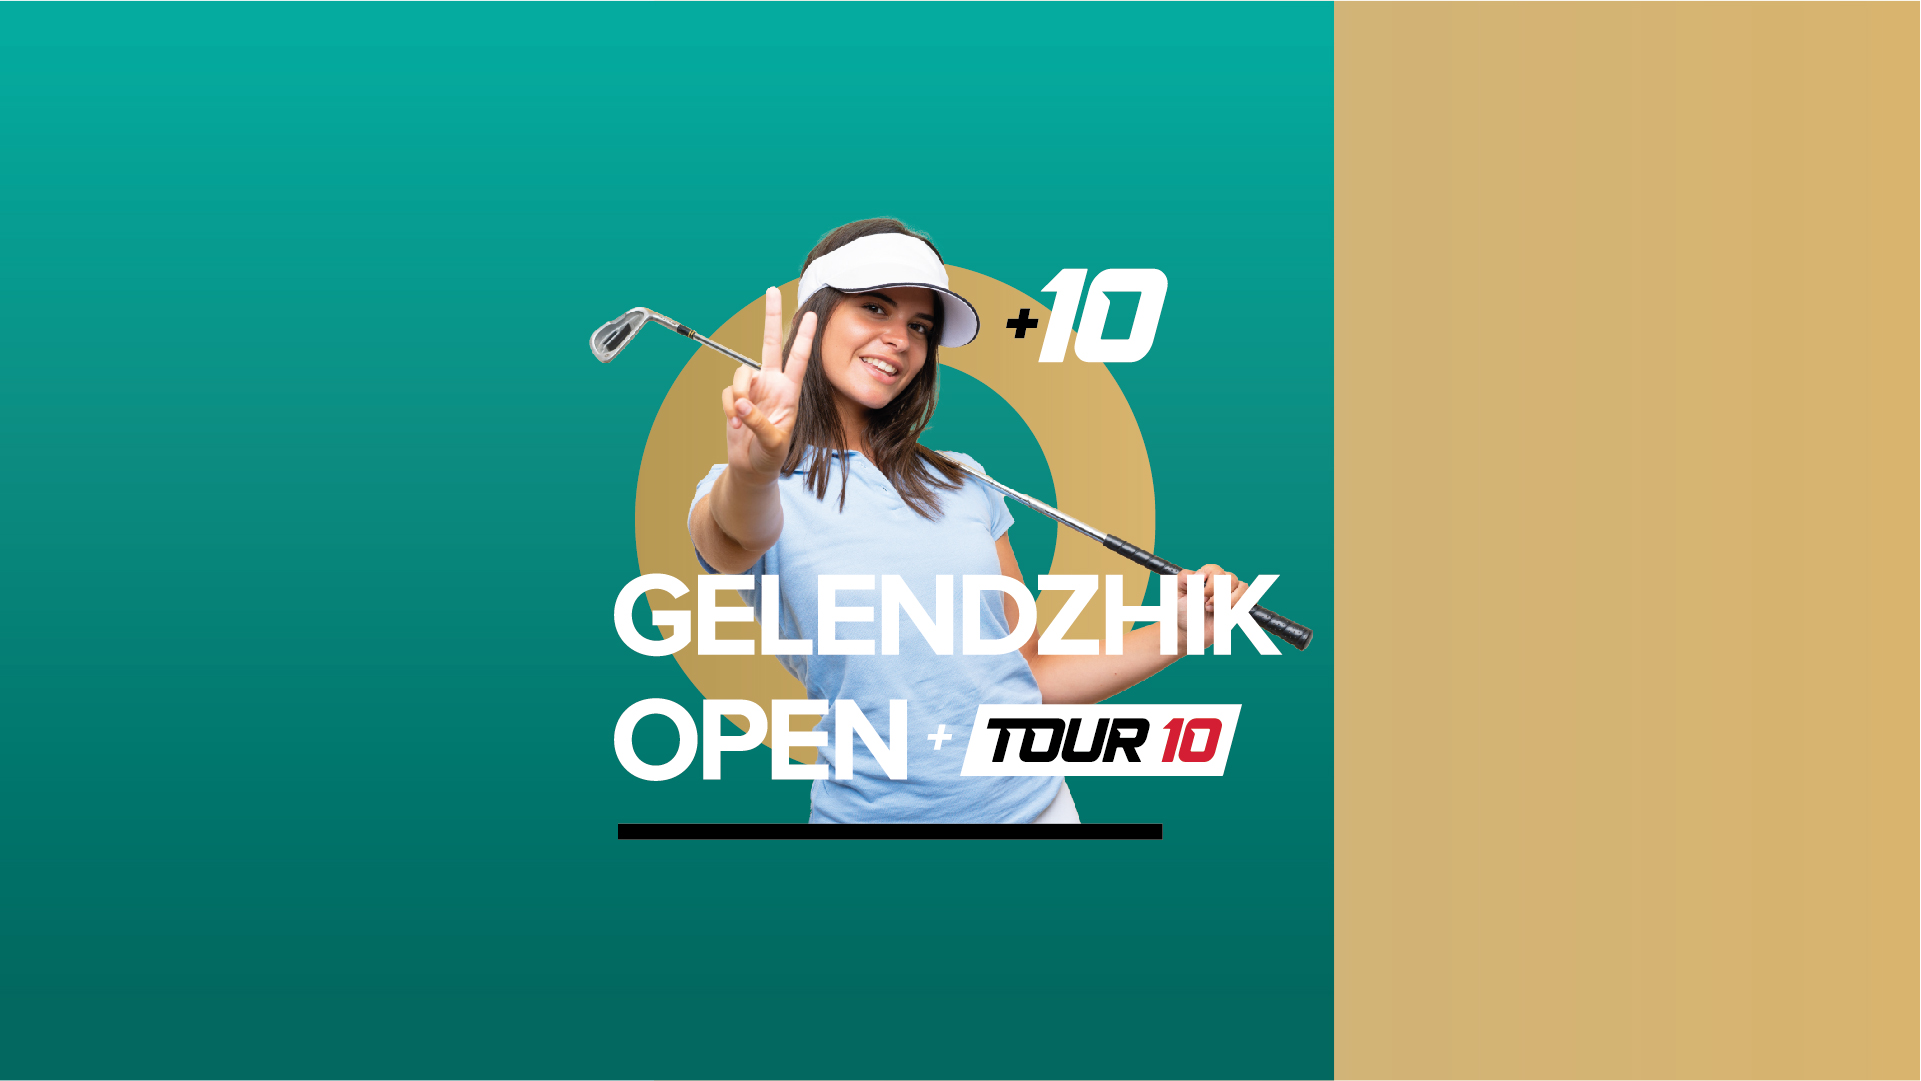 Турнир Gelendzhik Open + Tour 10